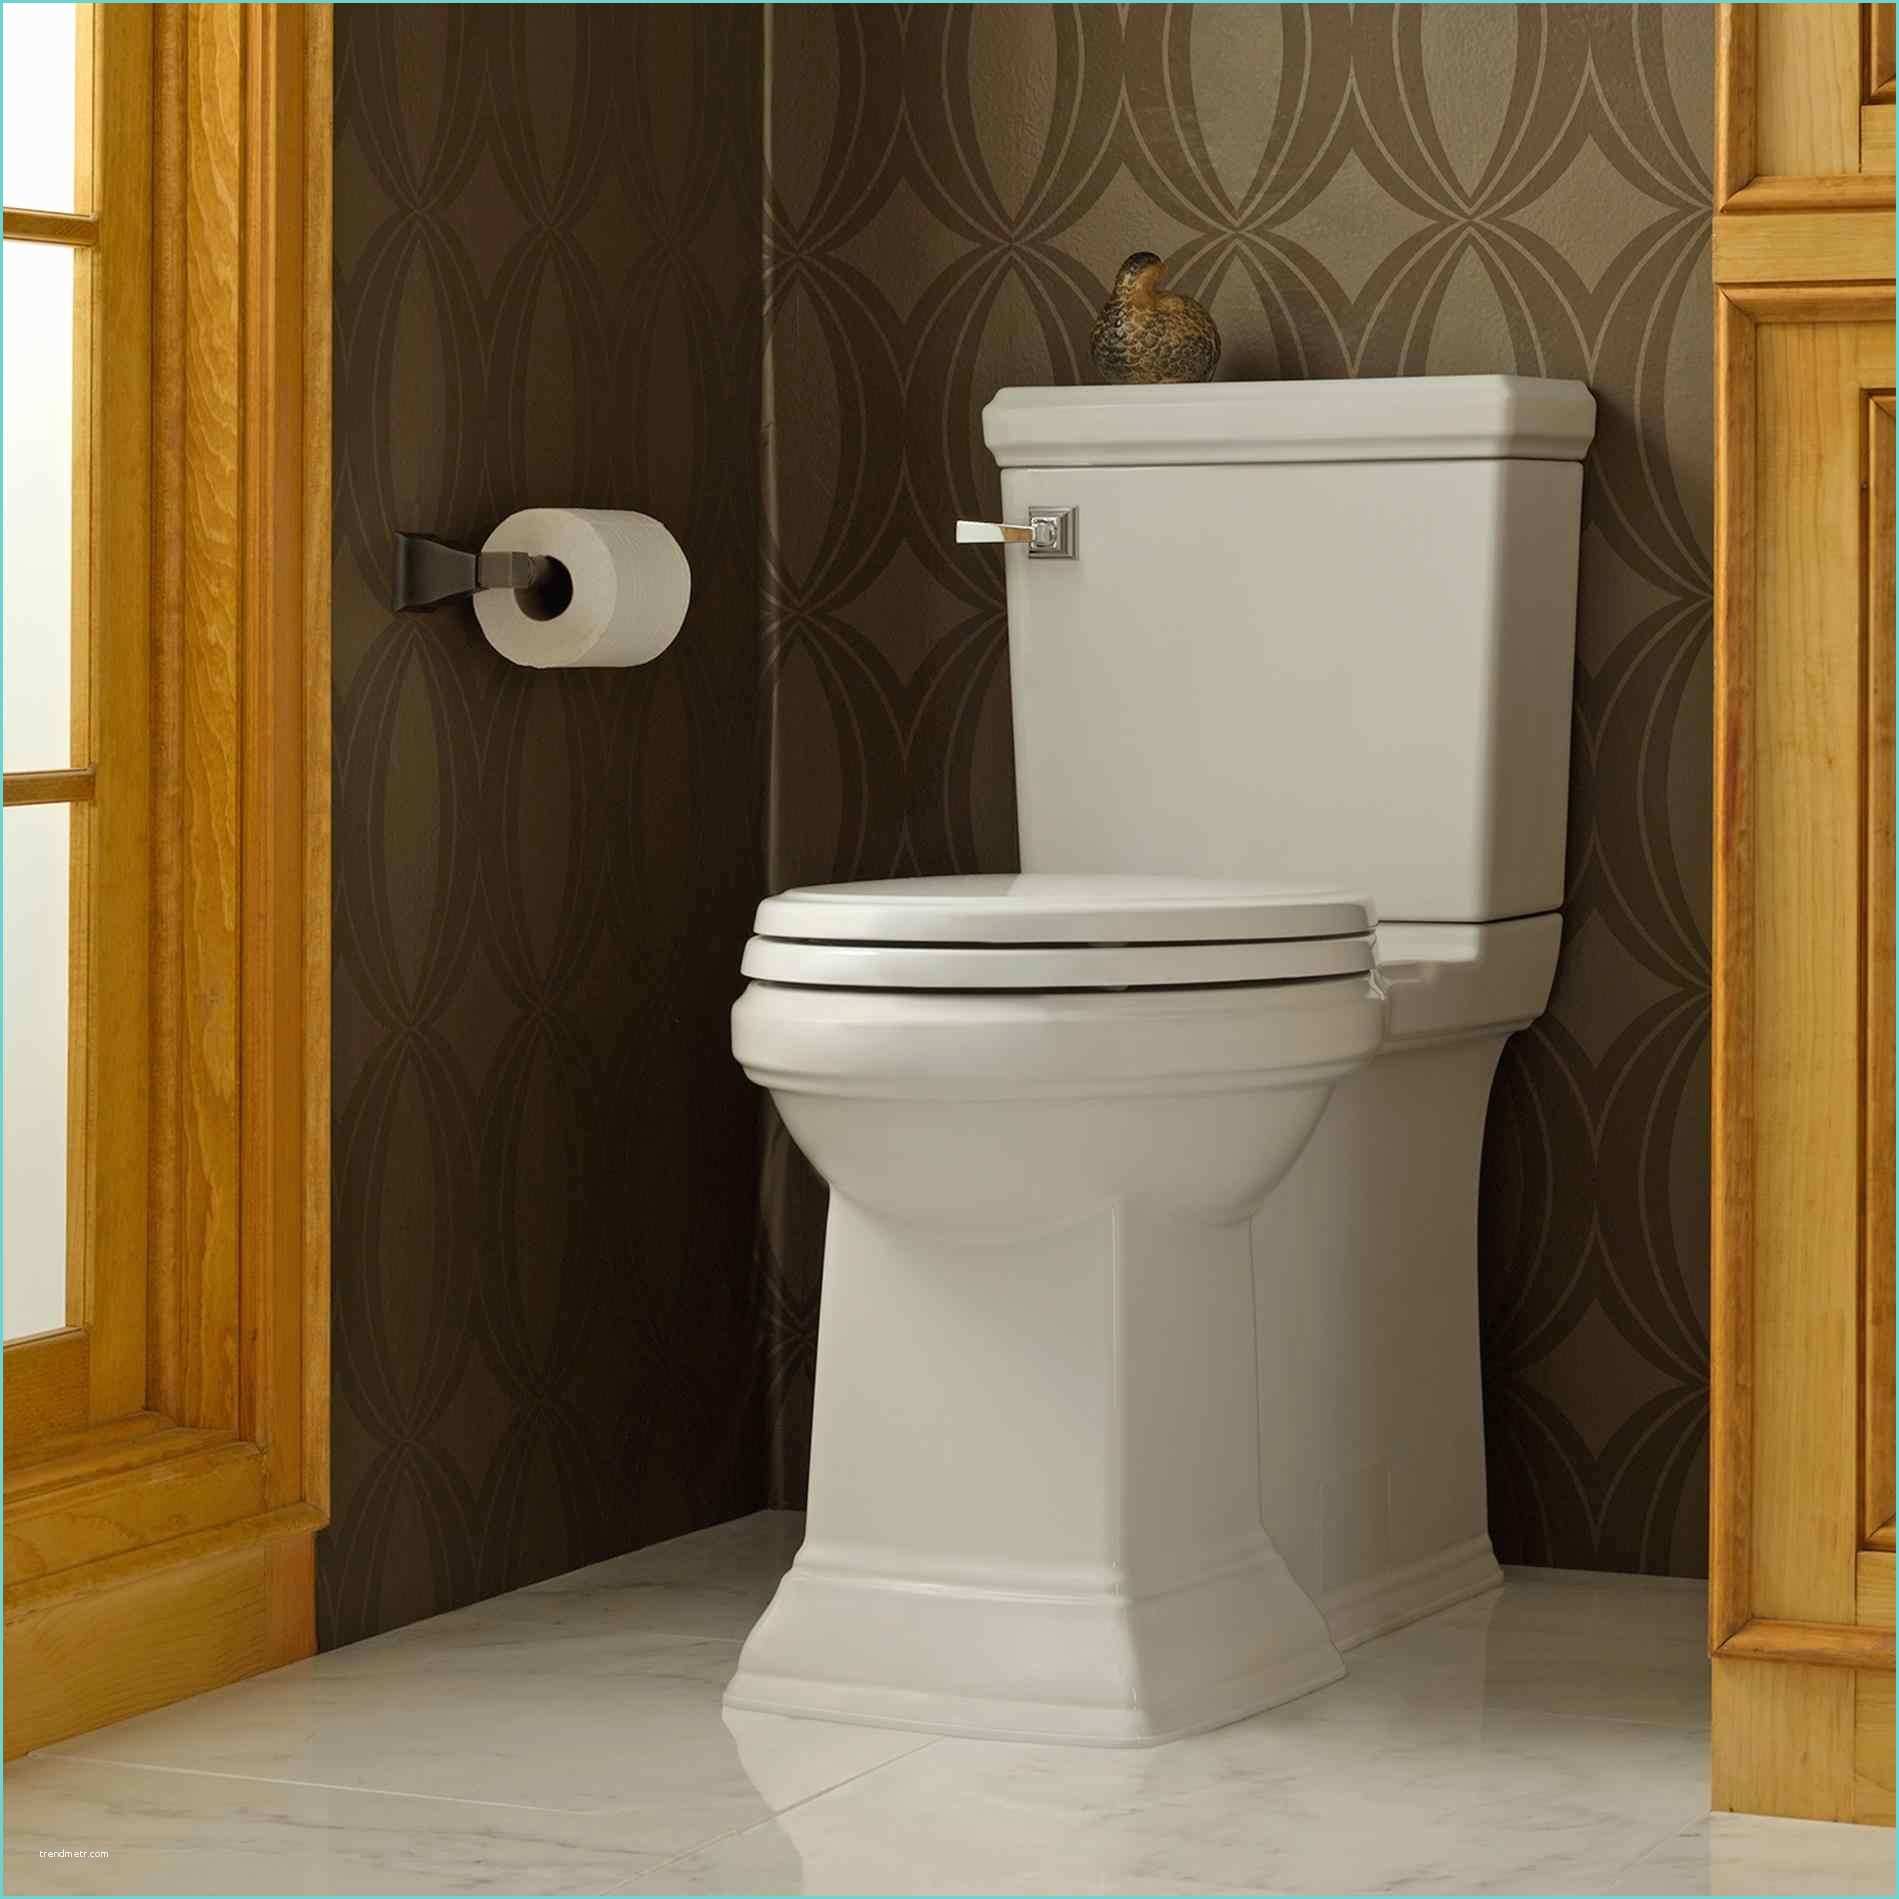 Convert Western toilet to Indian Western Style Bathroom Accessories Rustic Cross Bath